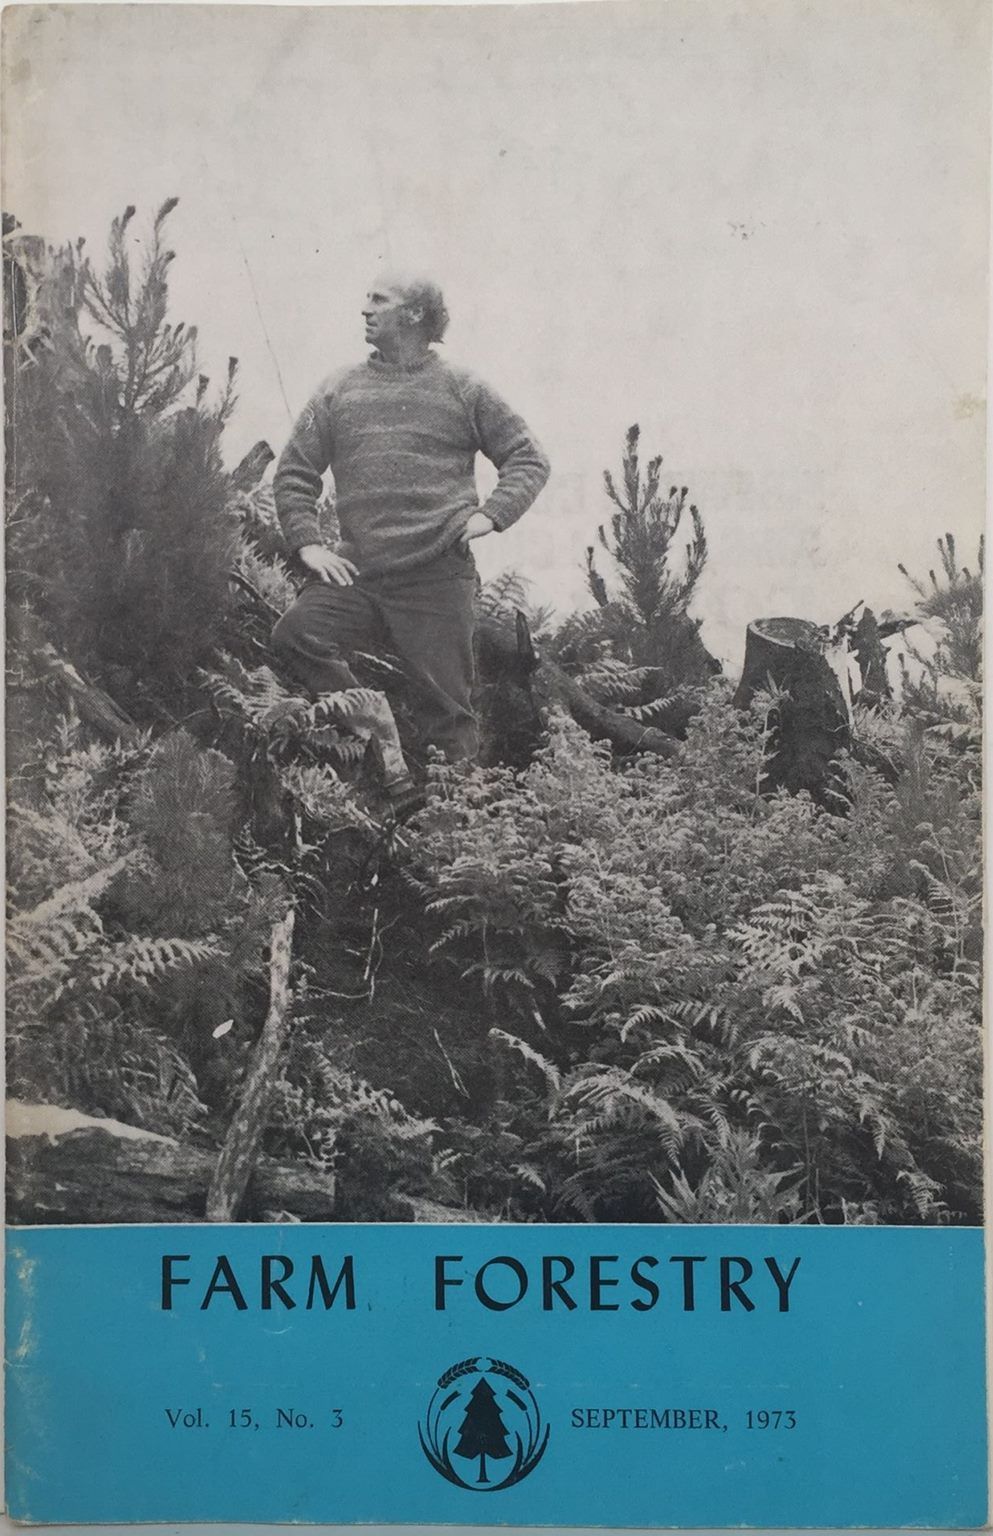 FARM FORESTRY ASSOCIATION: Journal : Vol 15 . No 3. Sept 1973